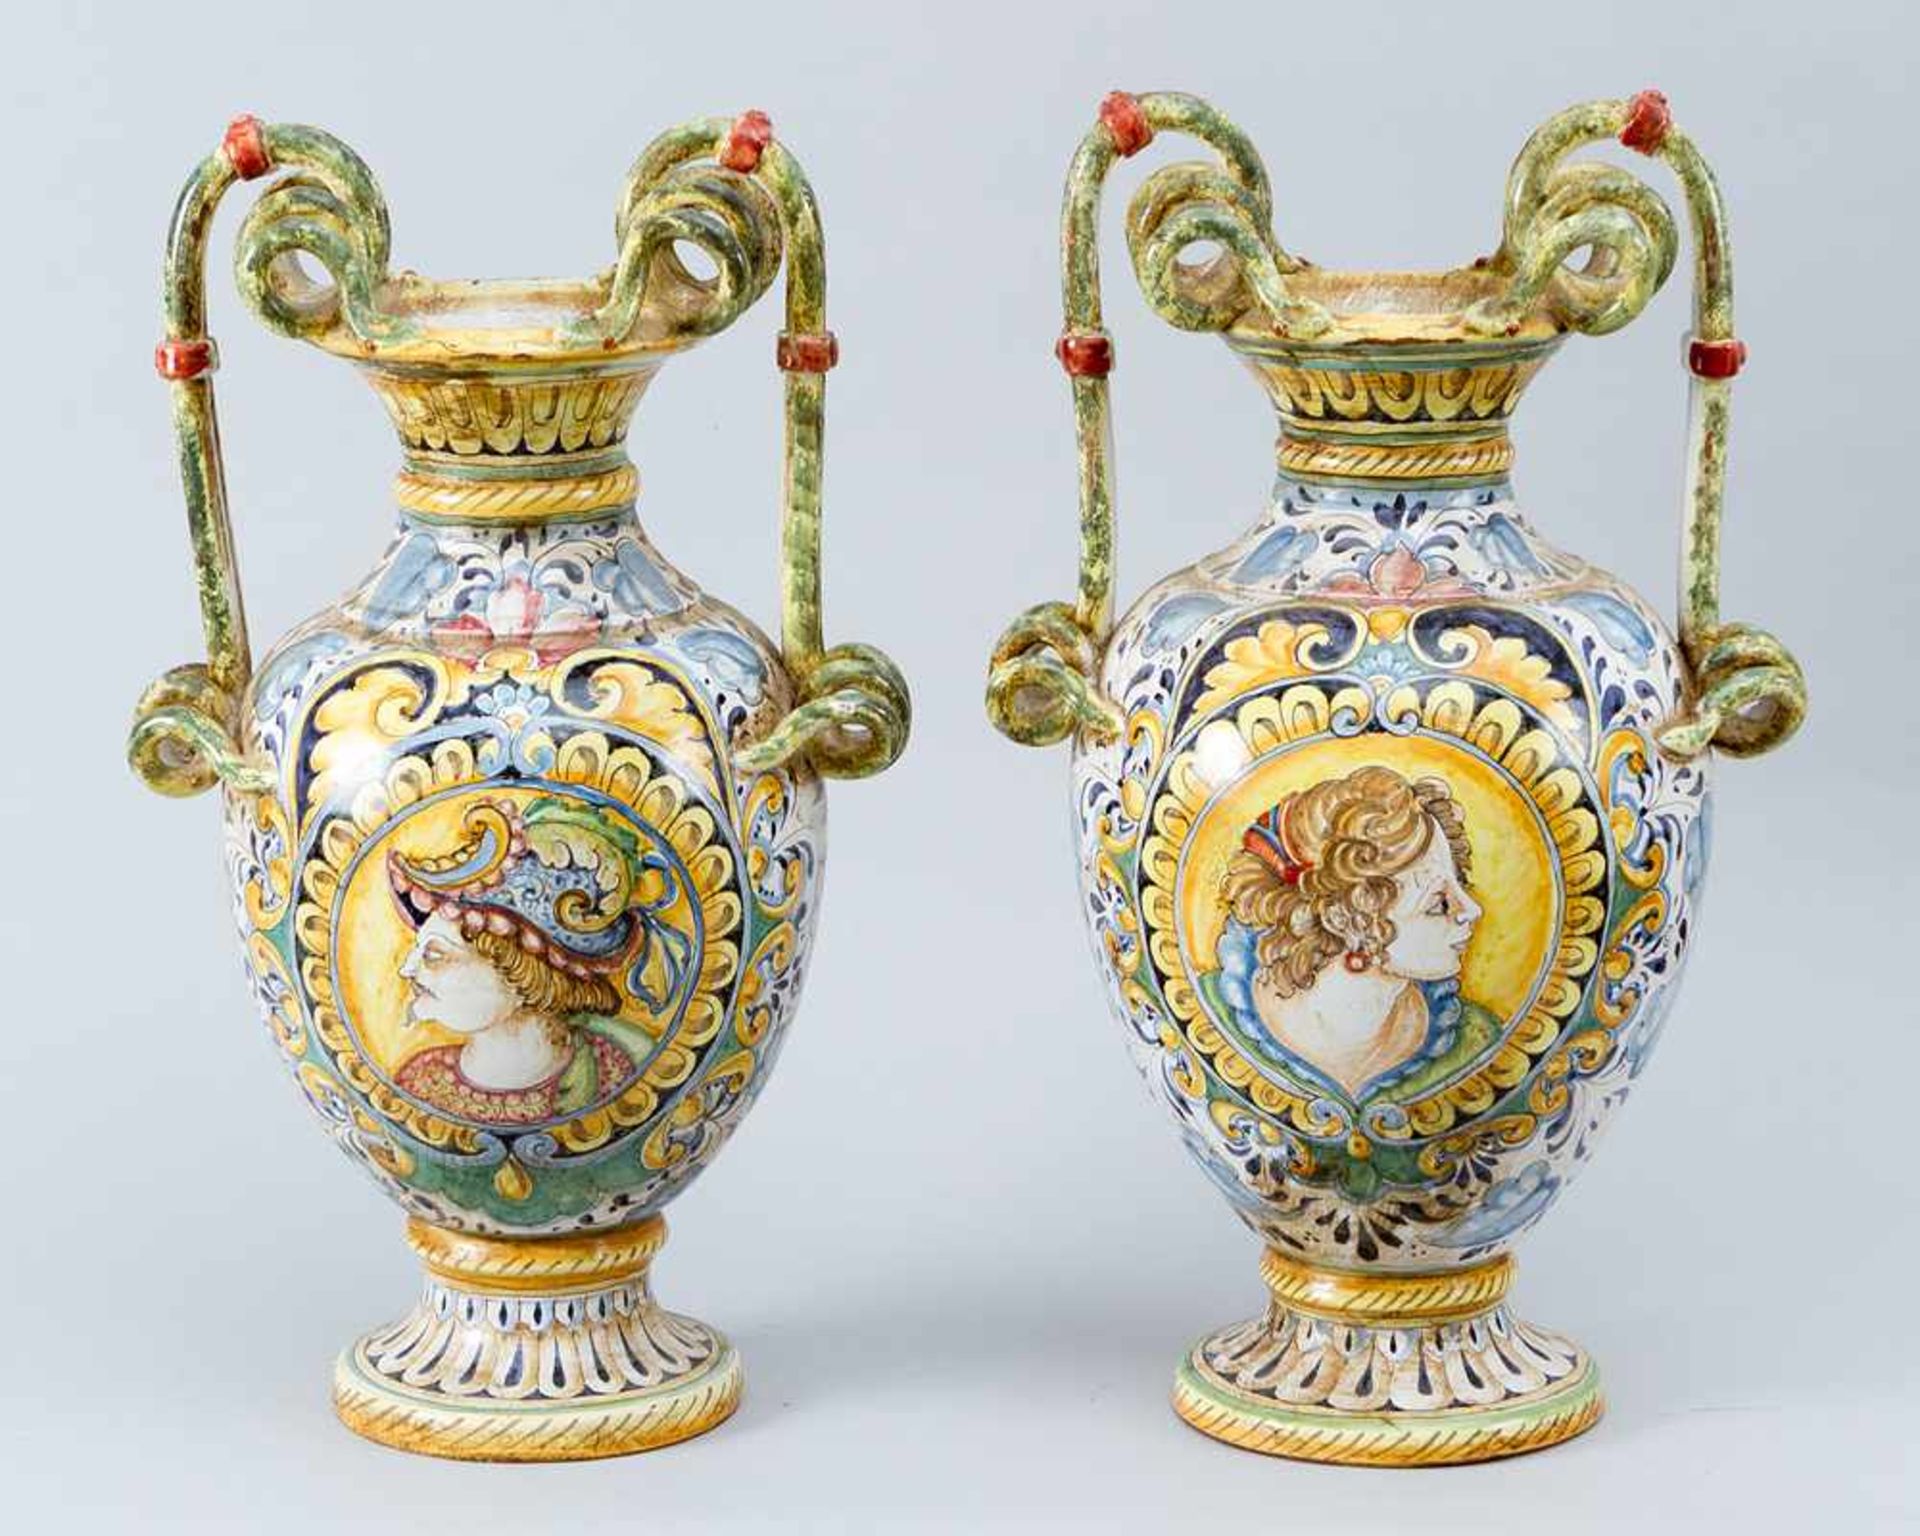 Pair of large Italian Majolica vases